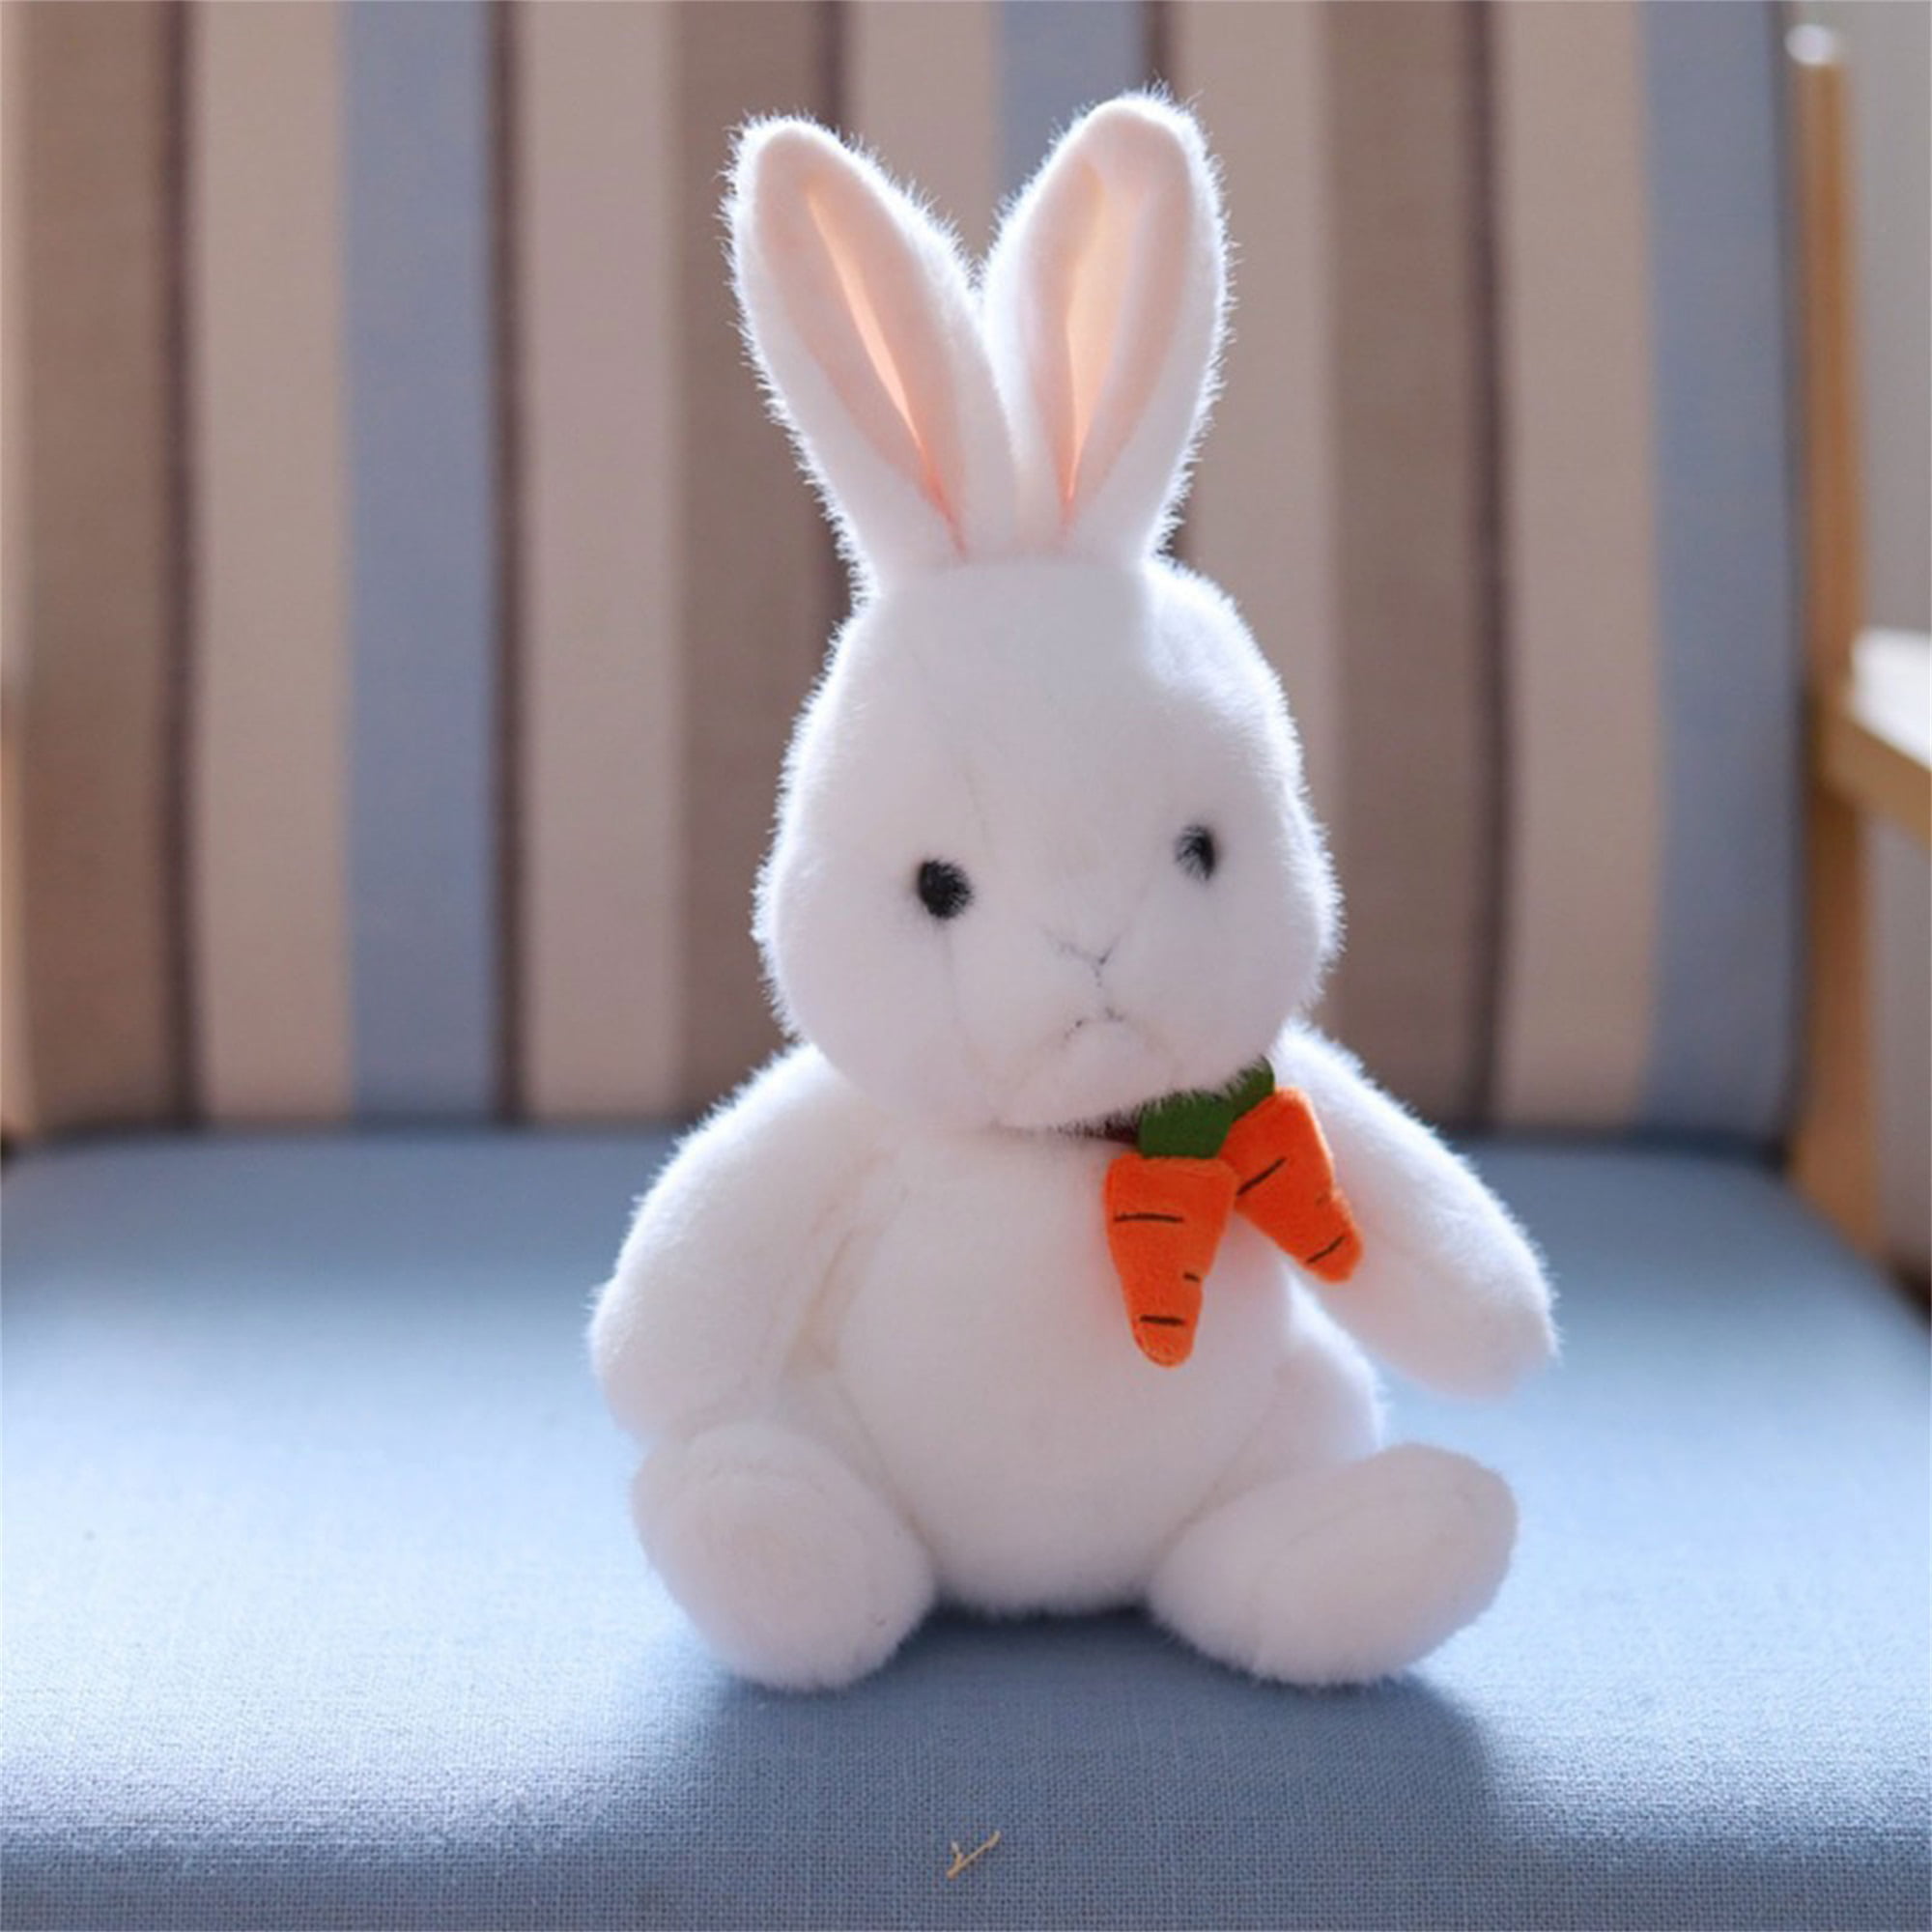 Kids Floppy Plush Toy Soft Stuffed Animated Rabbit Doll Easter Bunny Toy 